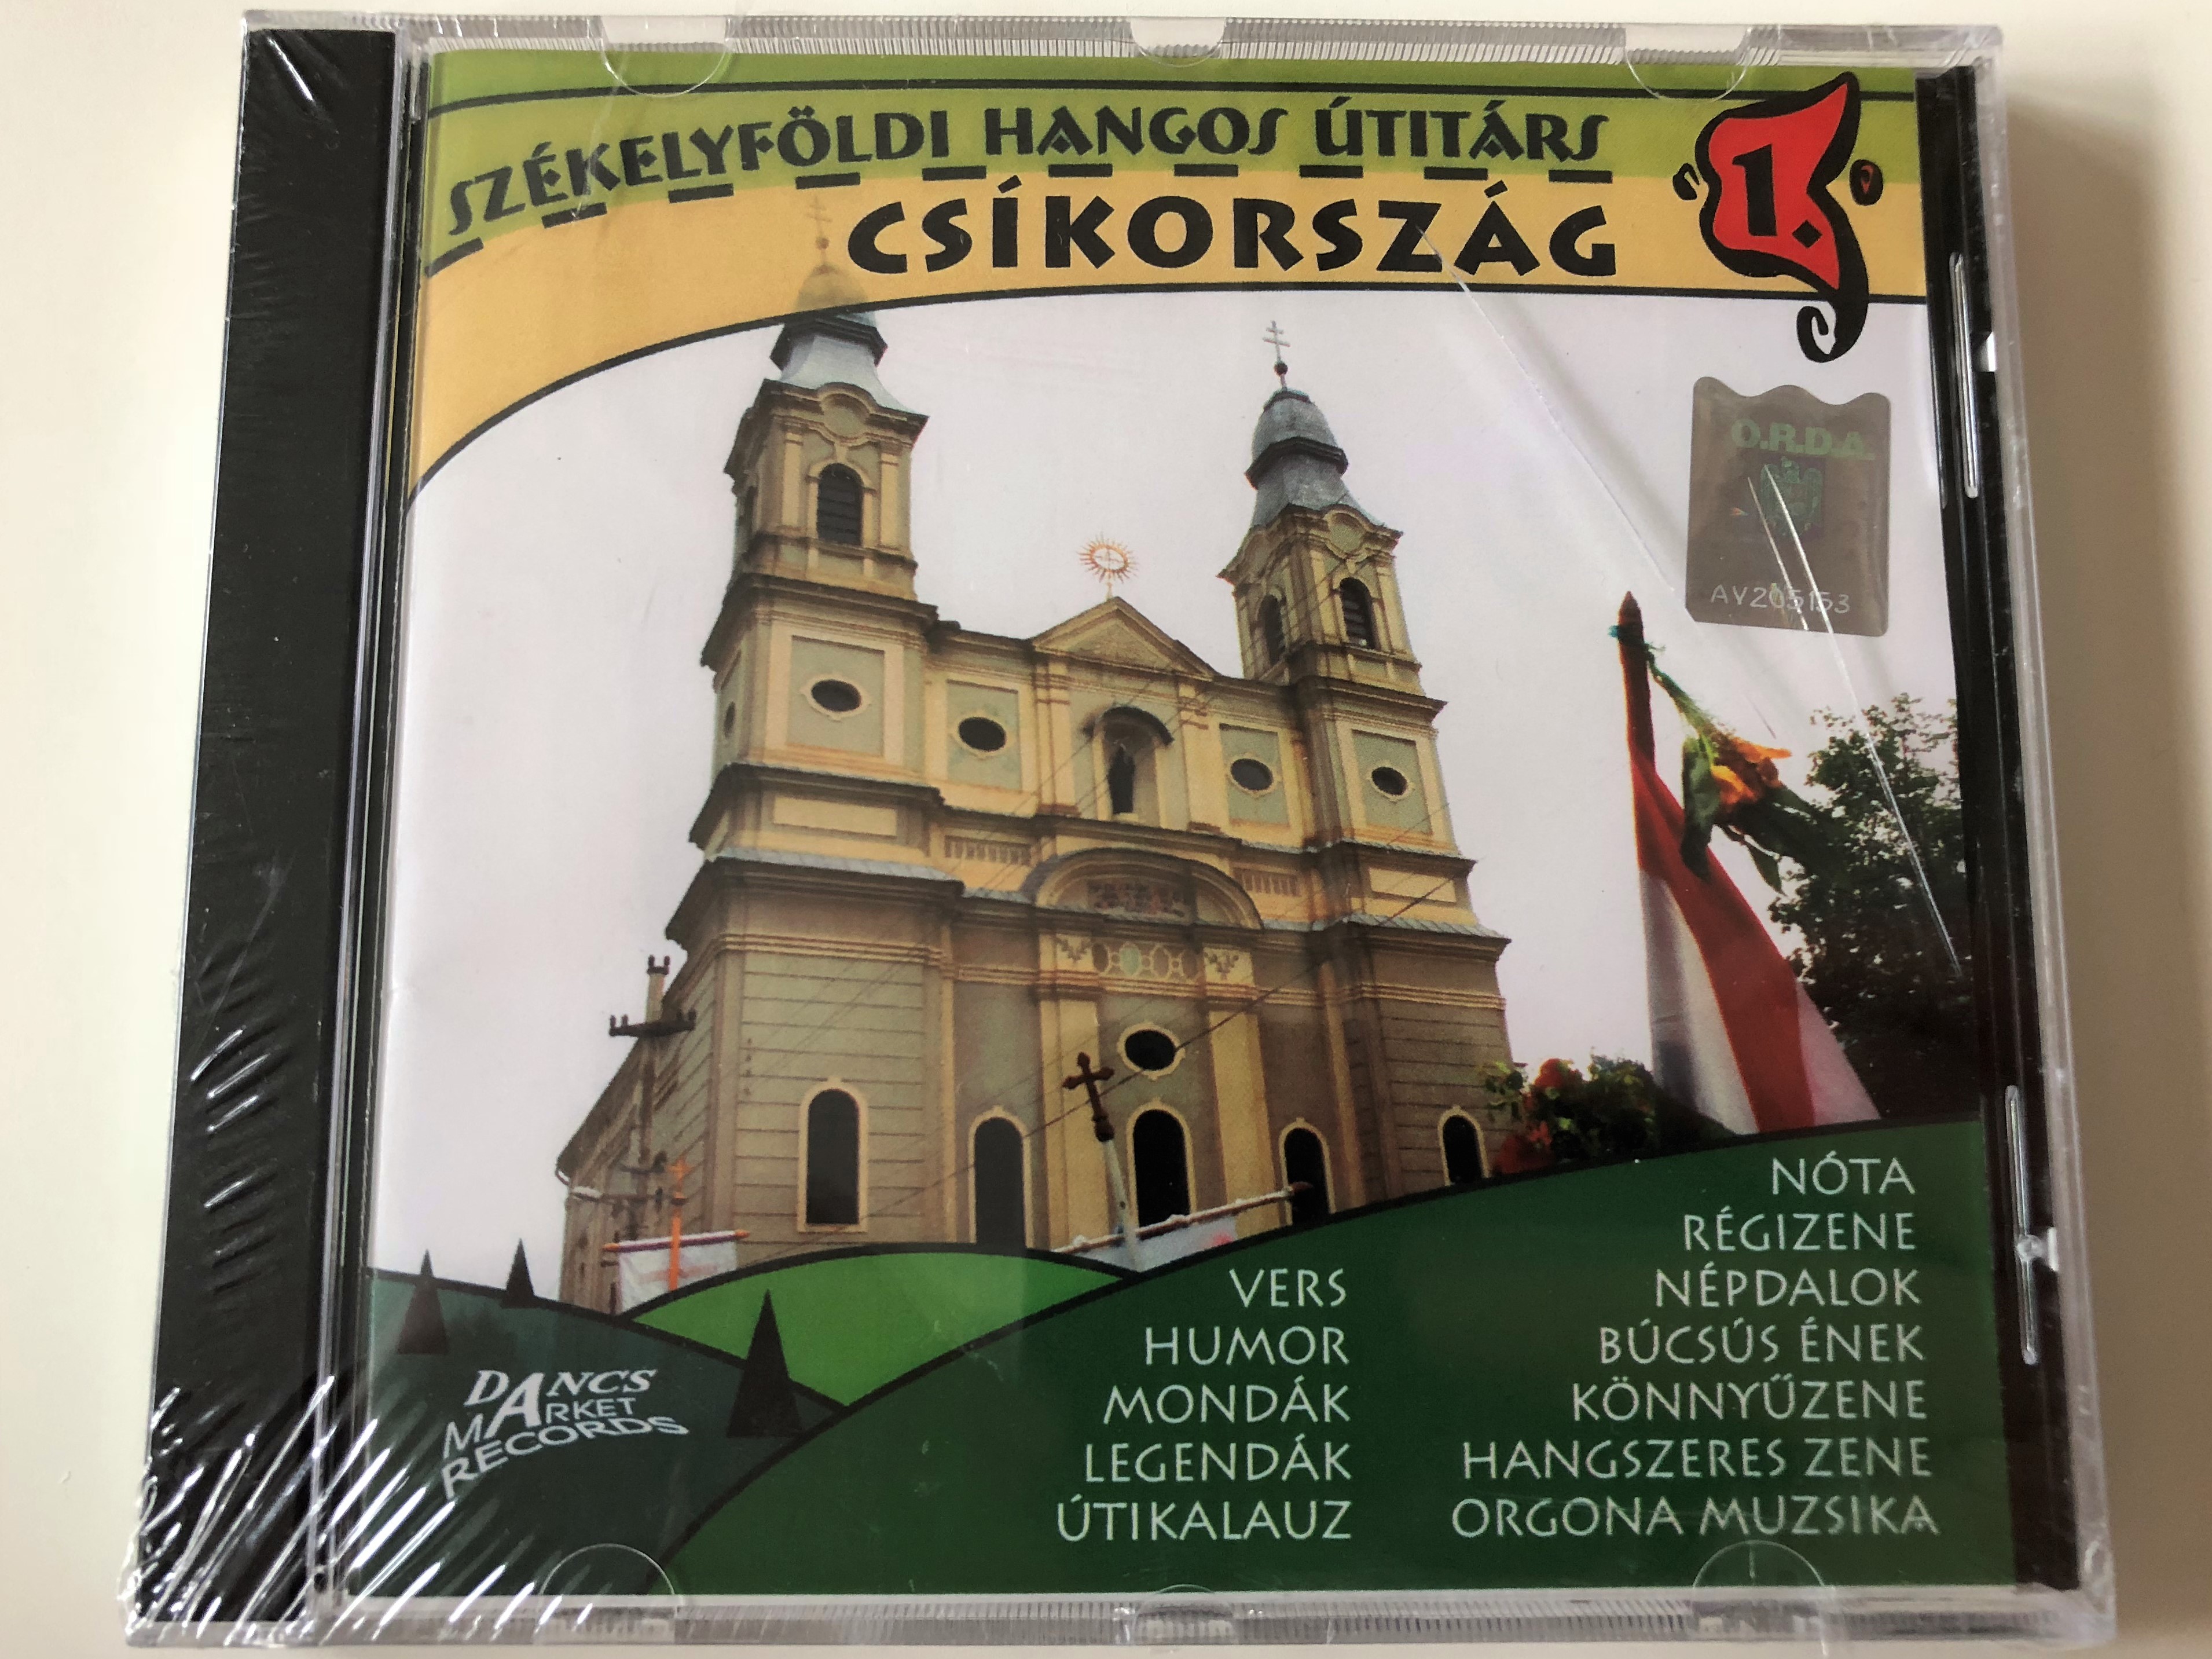 cs-korsz-g-sz-kelyf-ldi-hangos-tit-rs-1.-cd-hungarian-audio-guide-to-transylvania-dancs-market-records-1-.jpg